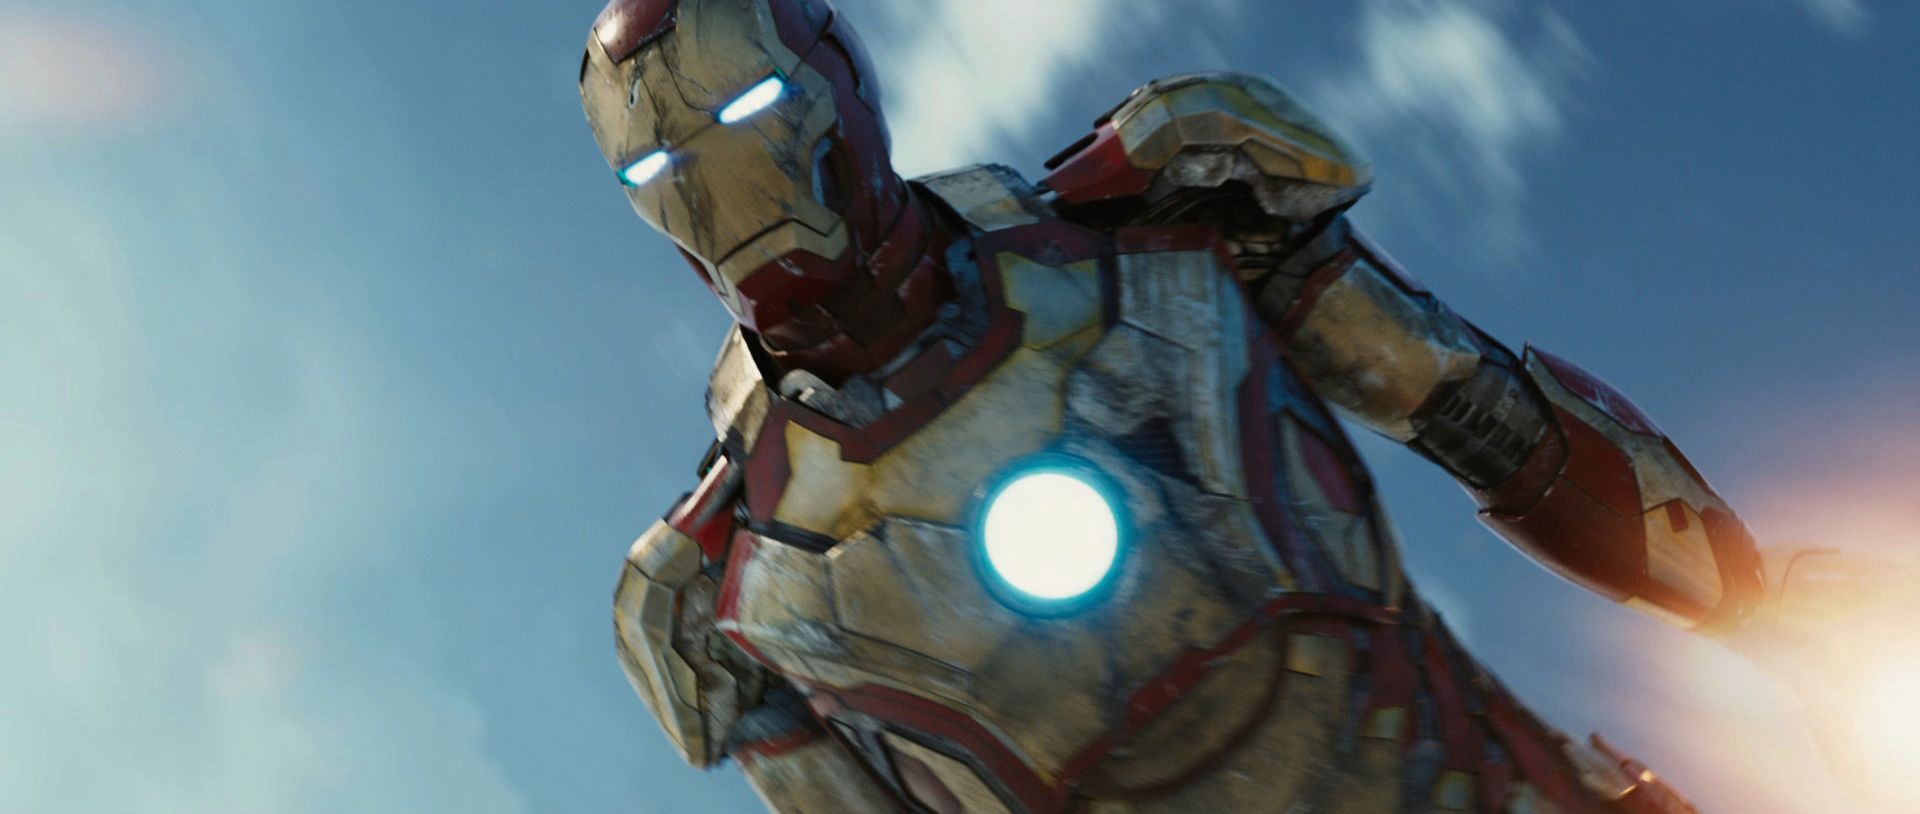 Iron Man 3 Photo 4